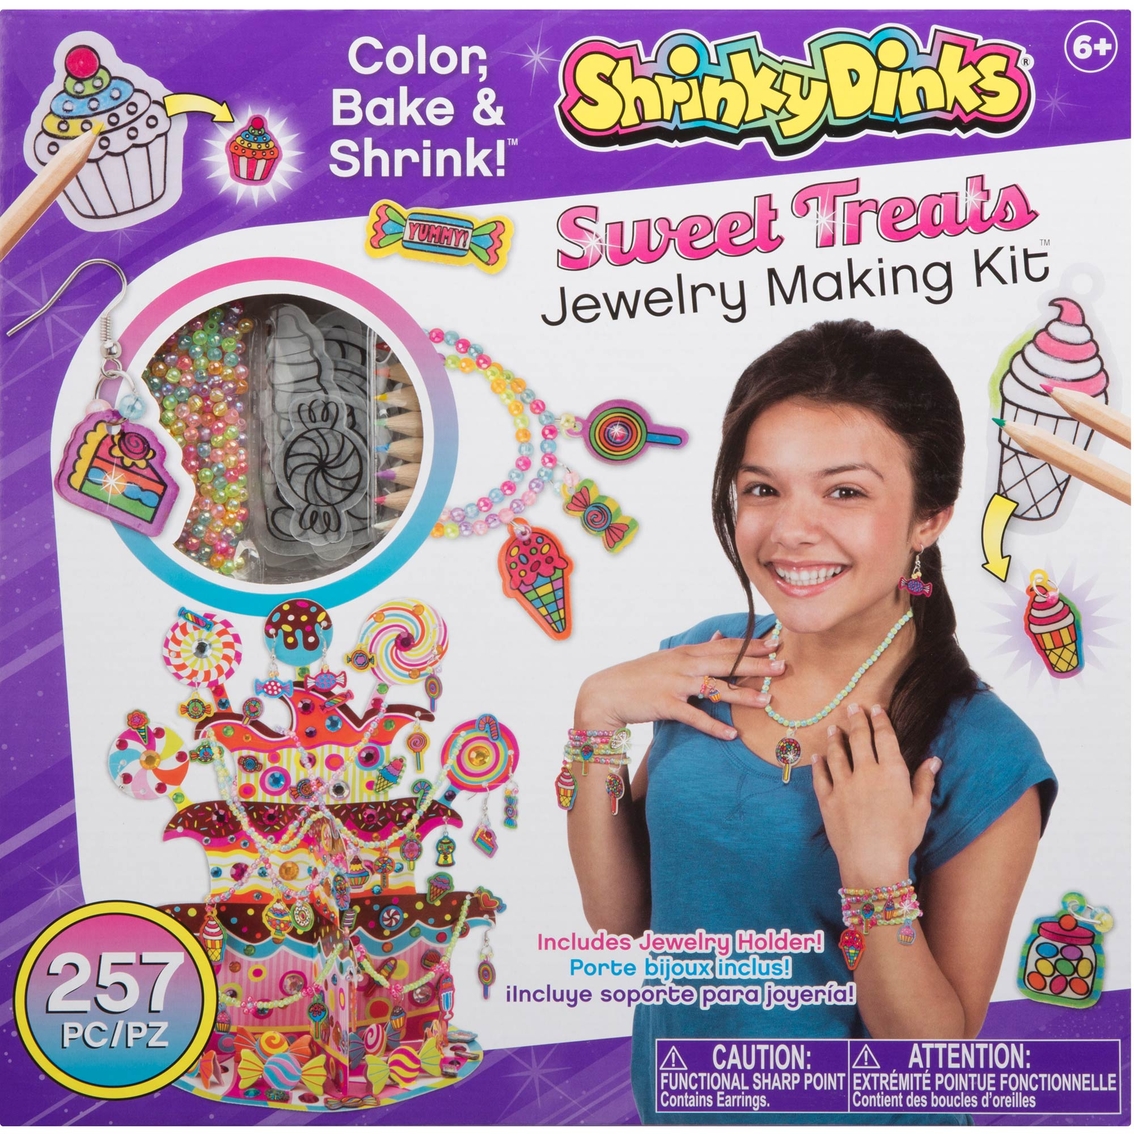 Shrinky Dinks So Sweet Treats Jewelry, Craft Kits